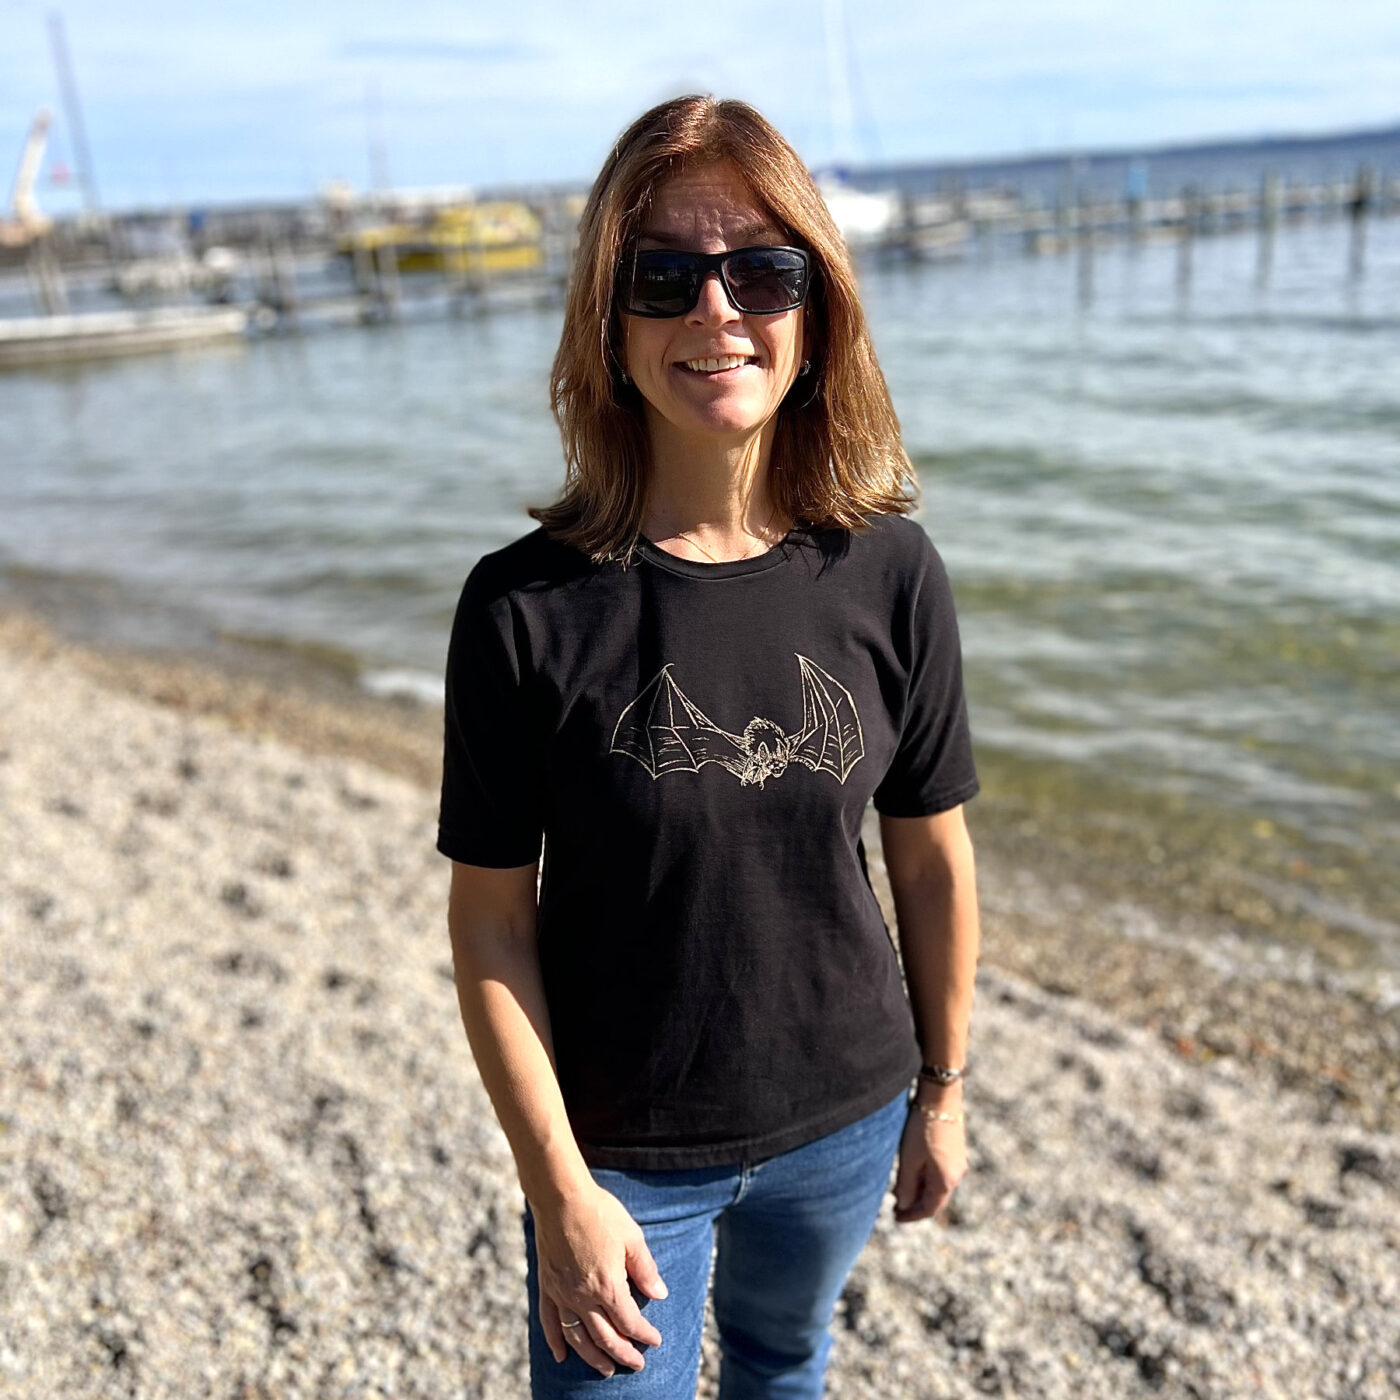 Frau am See trägt schwazes T-Shirt mit Siedruckmotiv Fledermaus